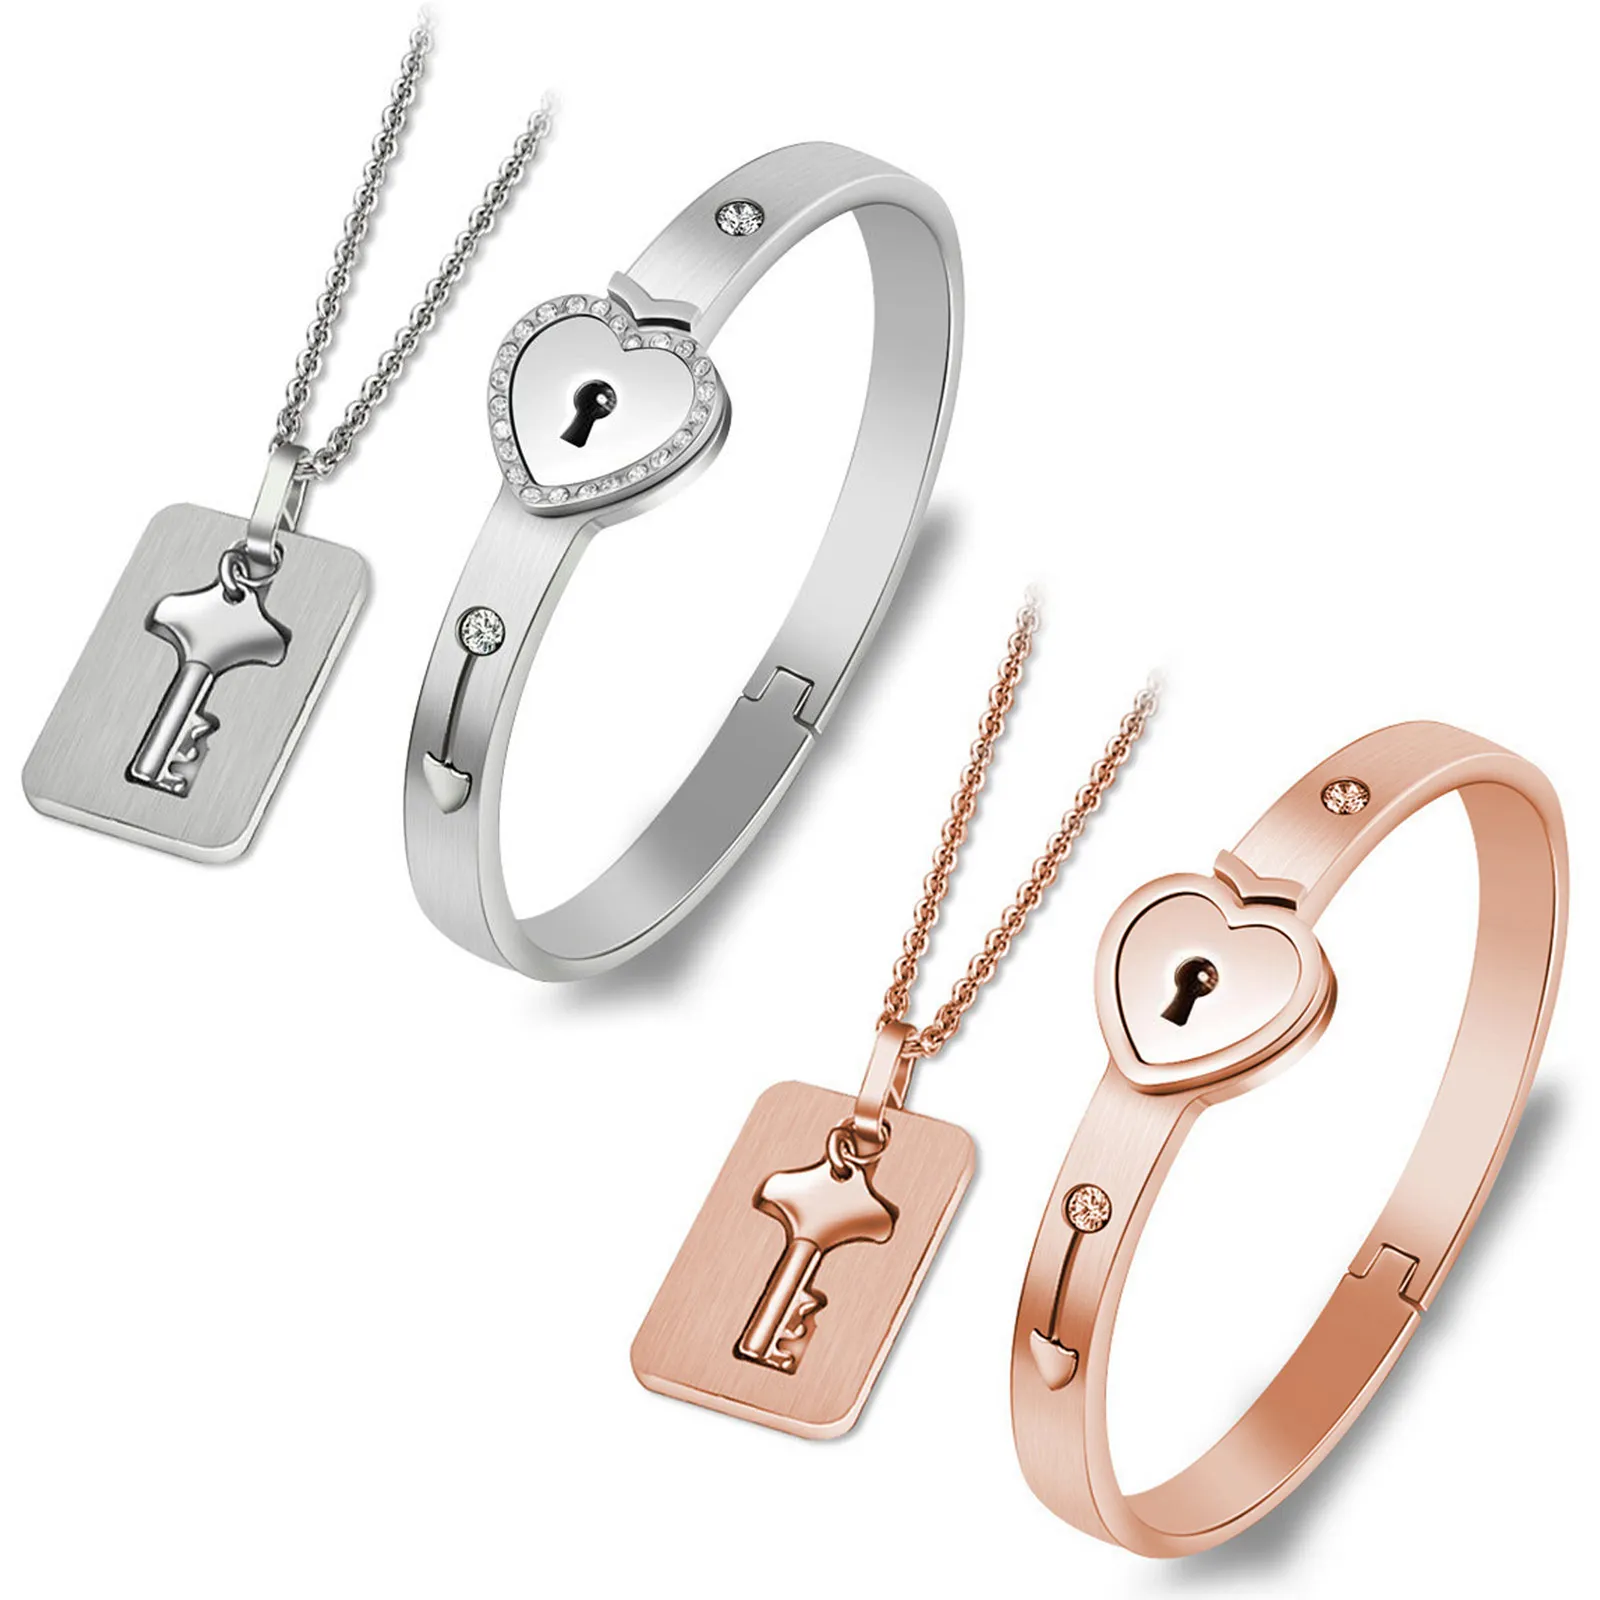 

Behogar 2PCS Fashion Couples Heart Key Pendant Necklace Lock Bangle Bracelet Set for Birthday Anniversary Valentines Gift